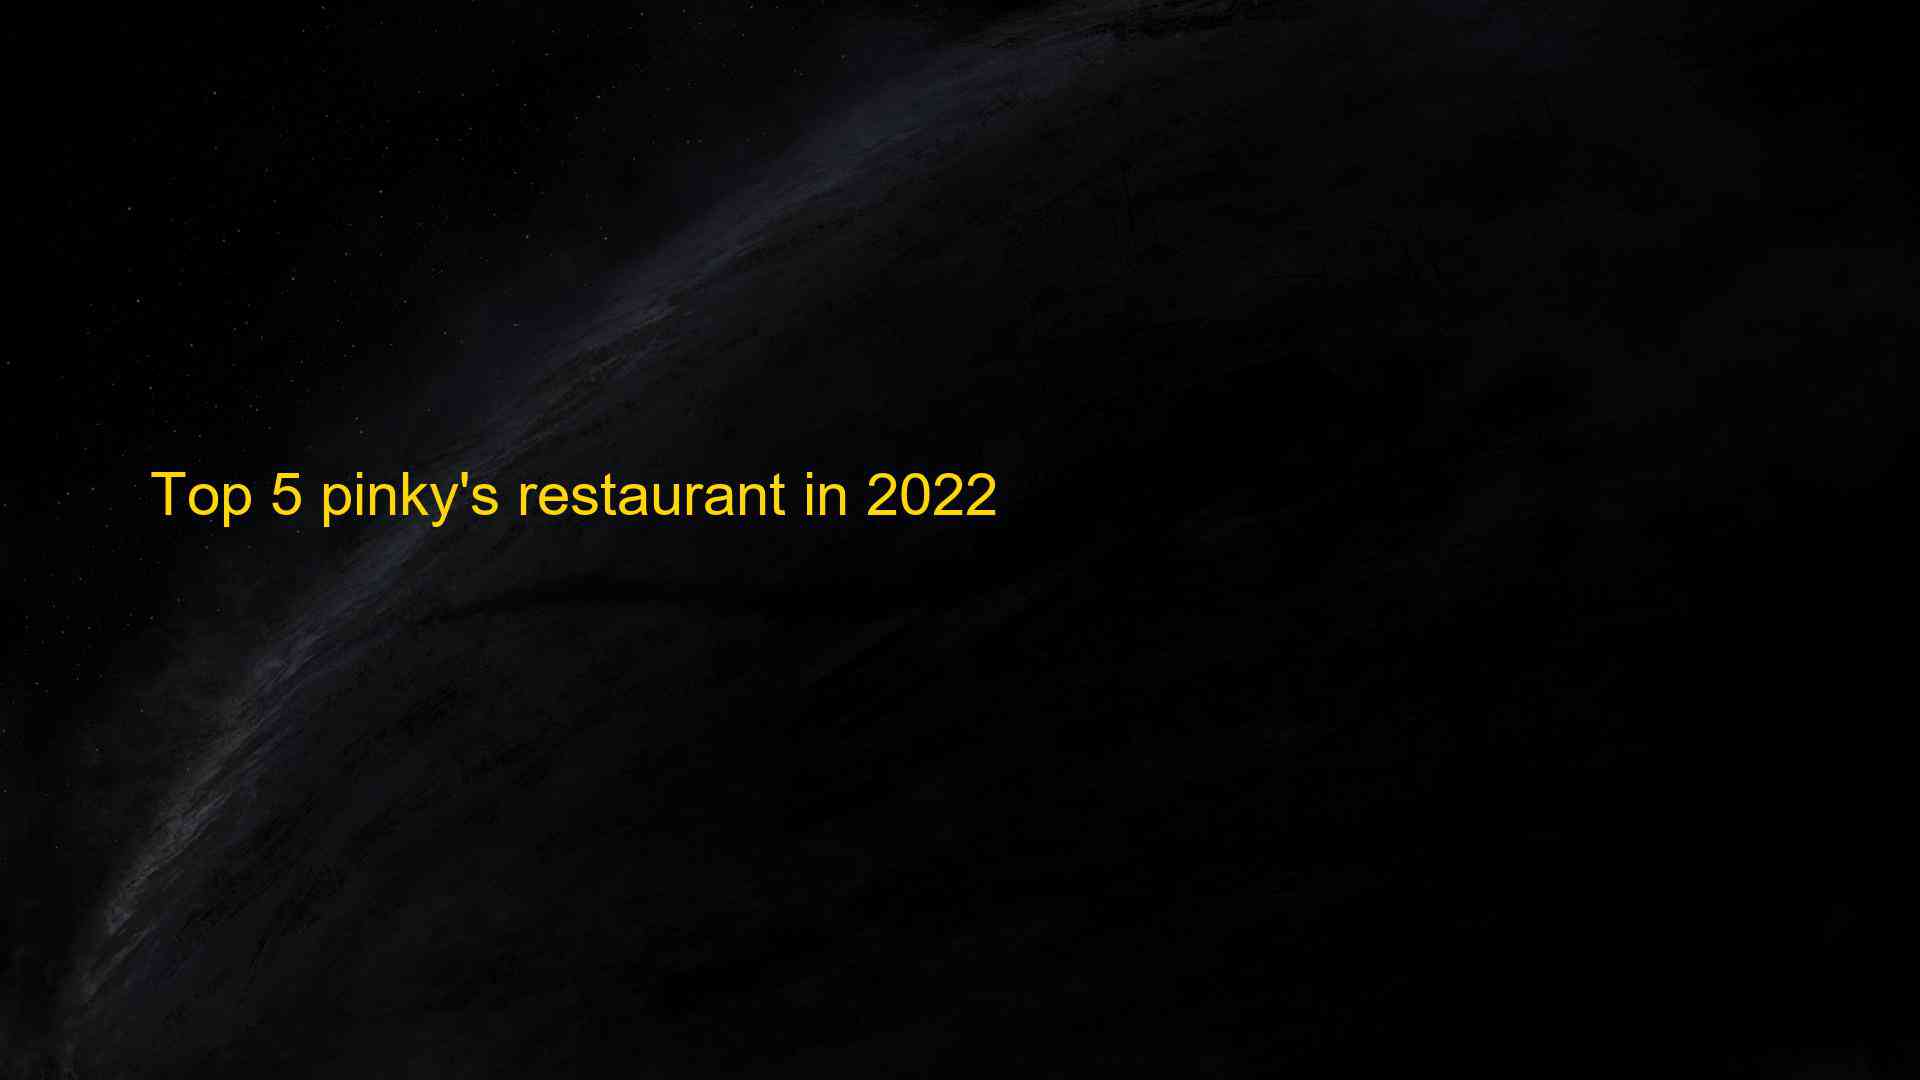 Top 5 pinkys restaurant in 2022 1662963660